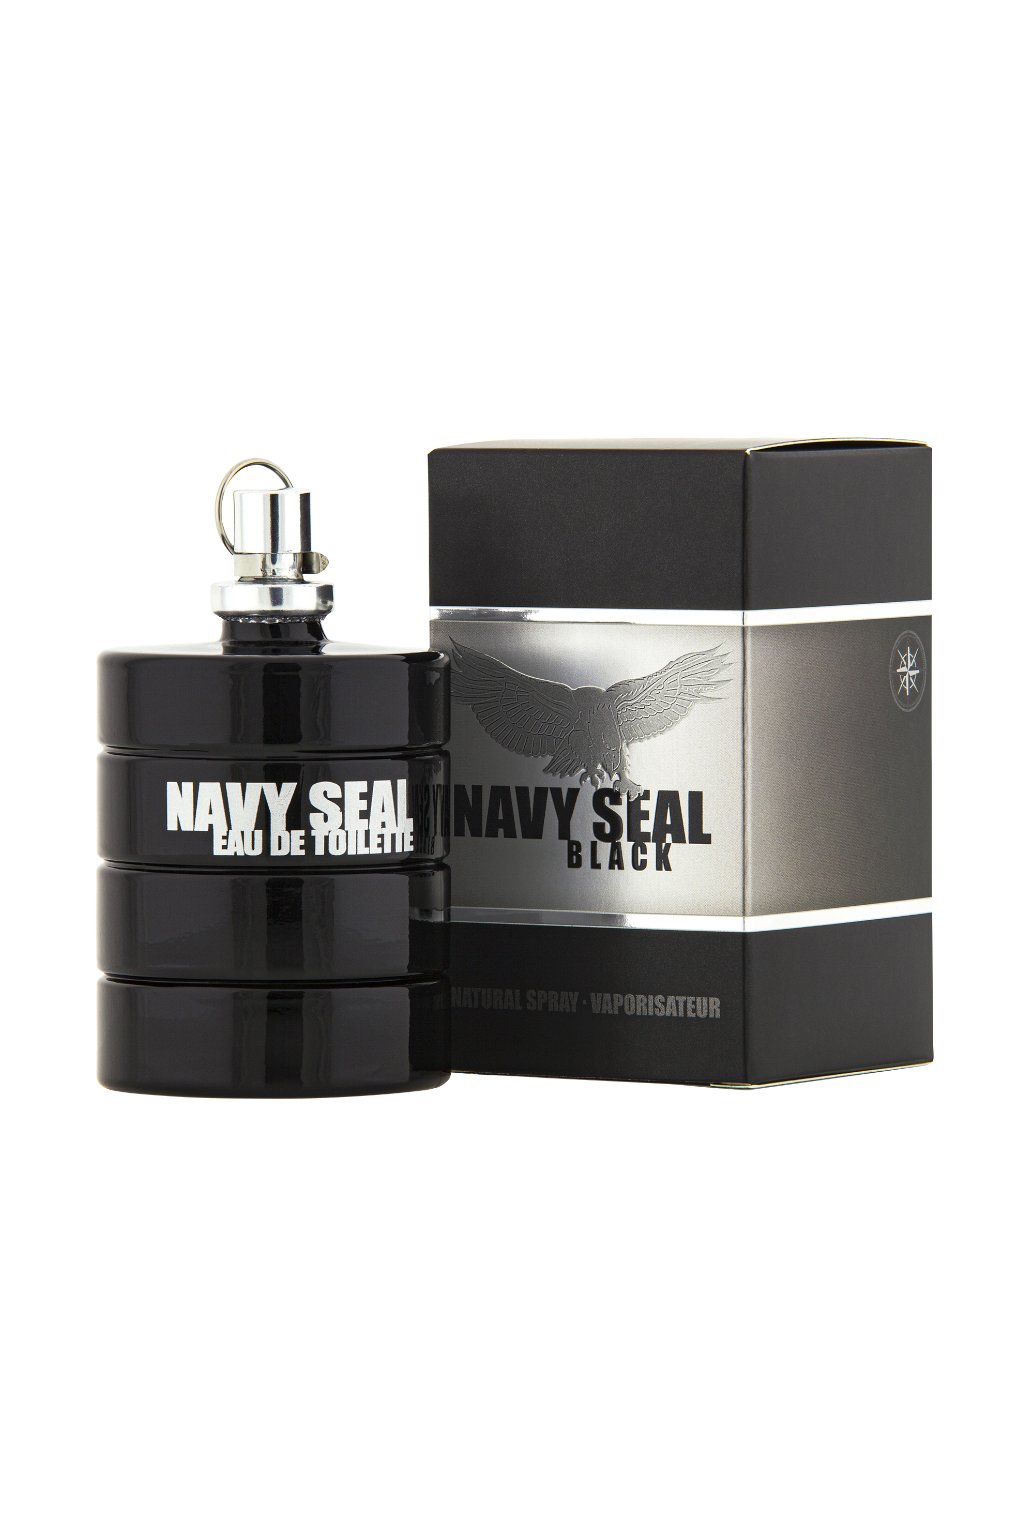 navy black1024x1364 n